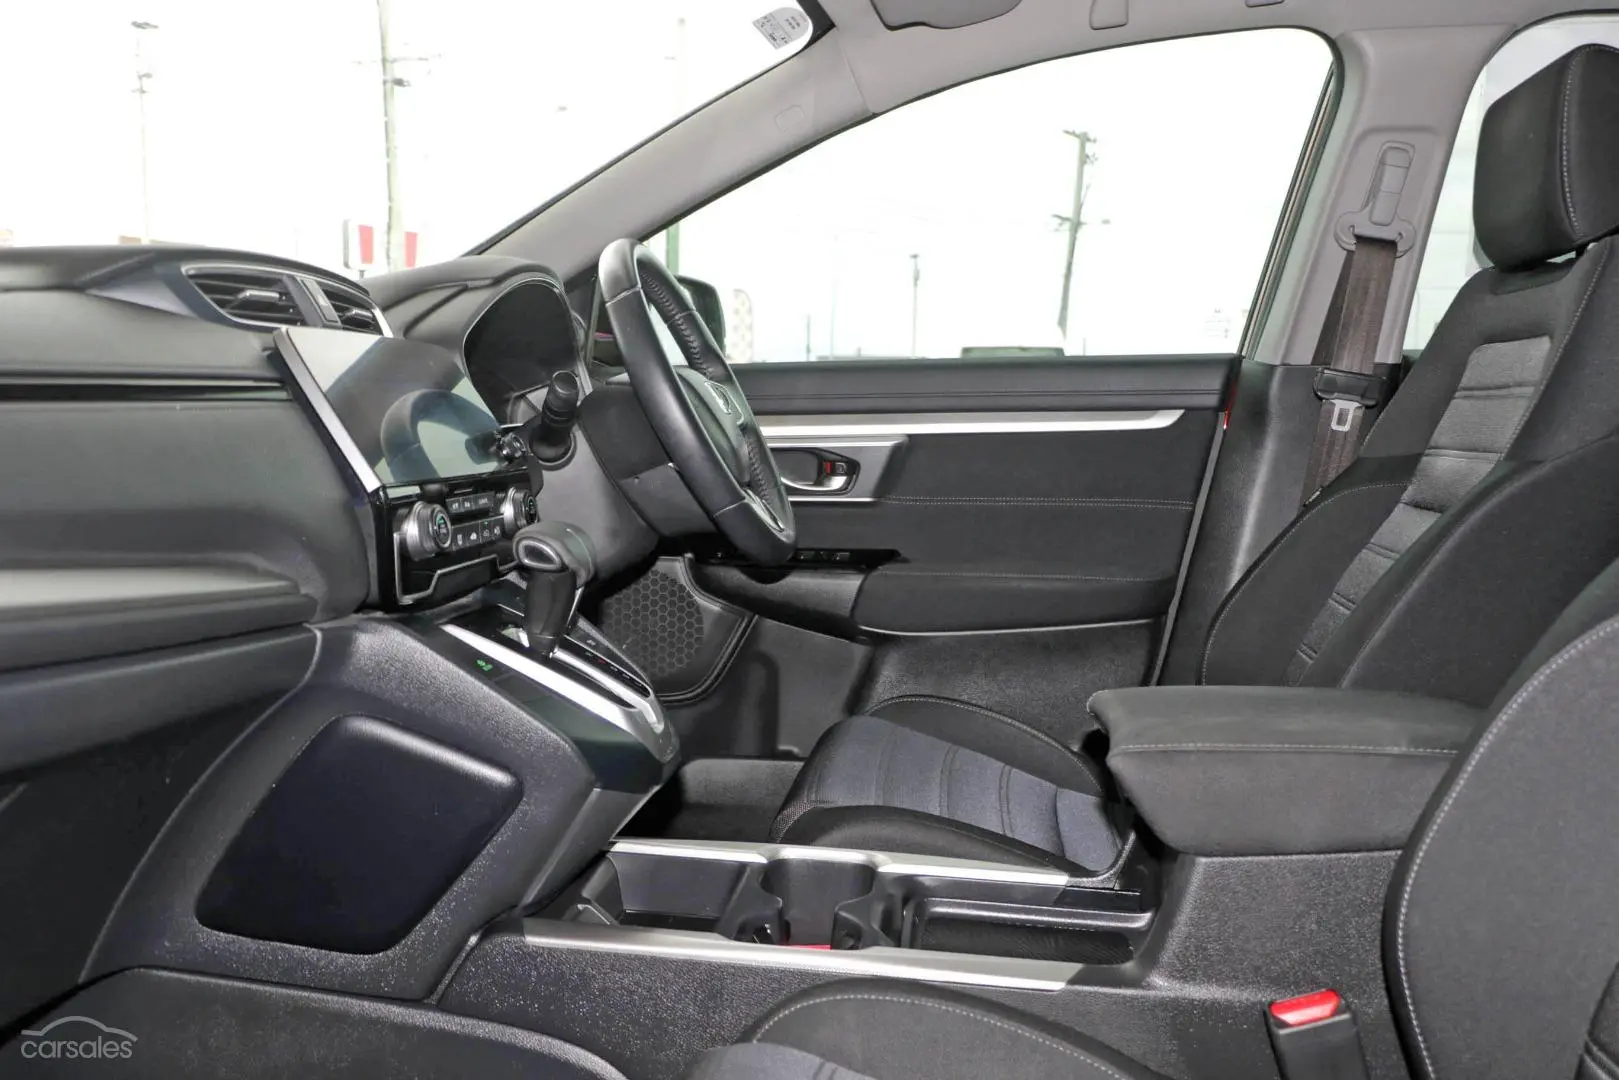 2019 Honda CR-V Image 8